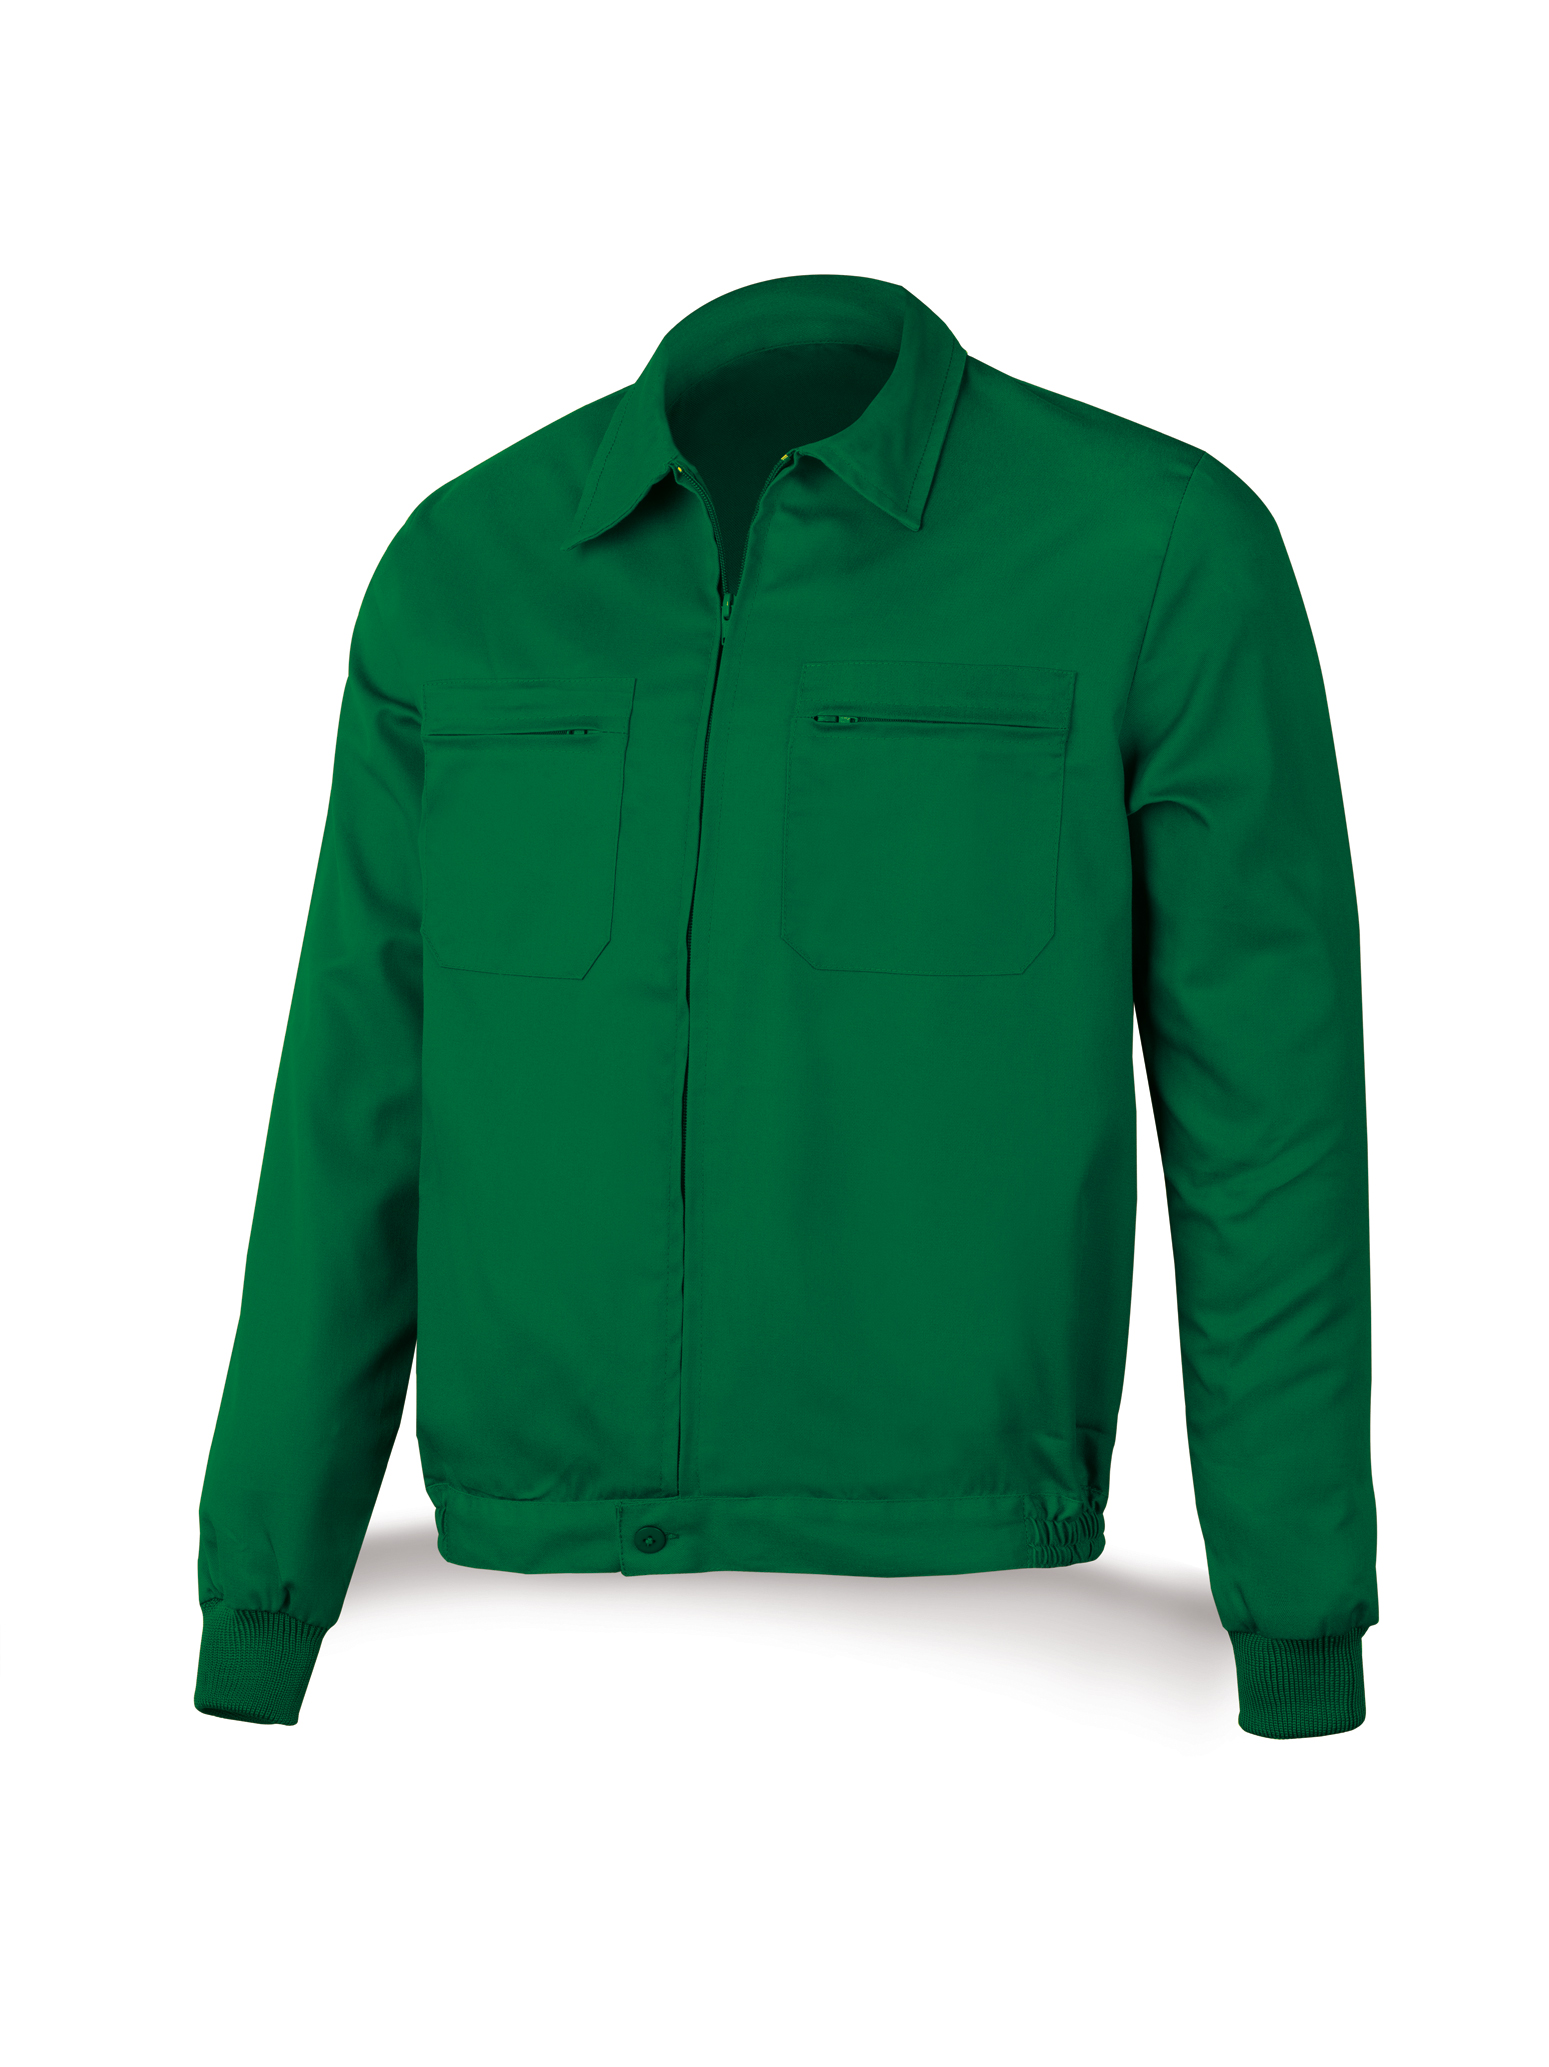 388-CV Workwear Basic Line Tergal. Green.